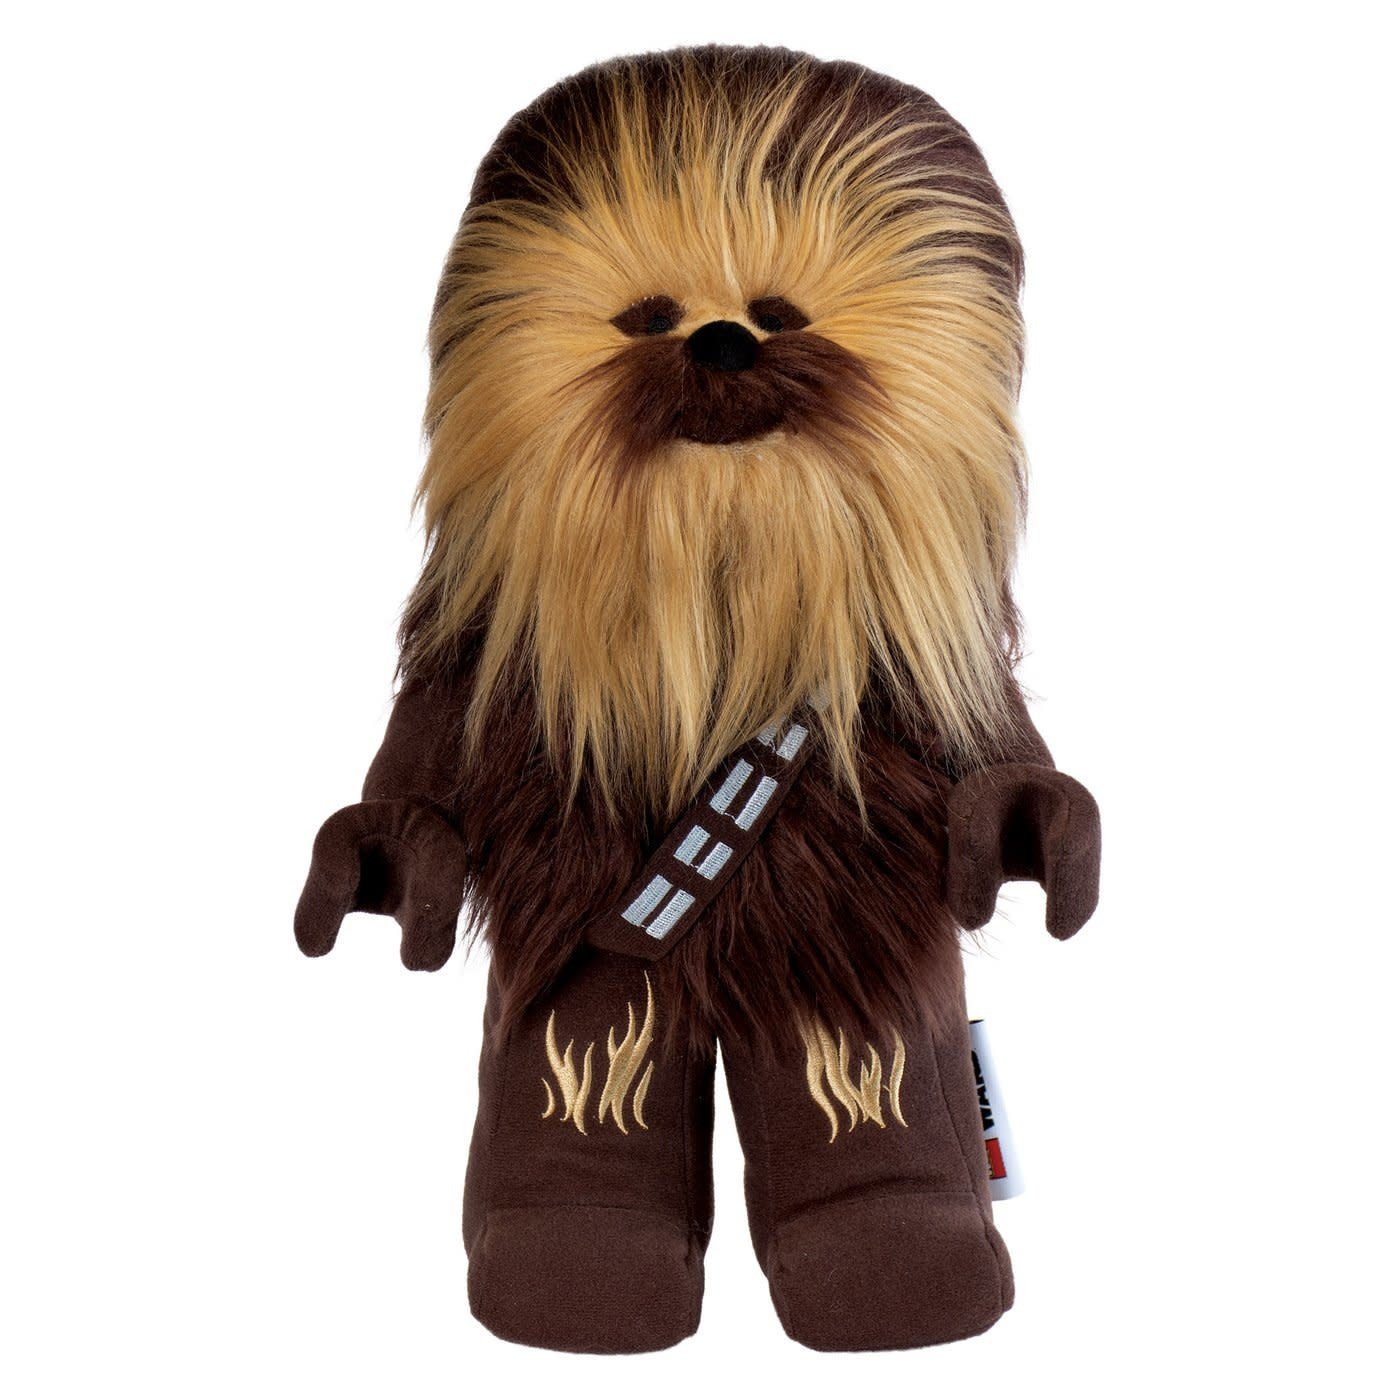 Lego Star Wars Chewbacca Plush